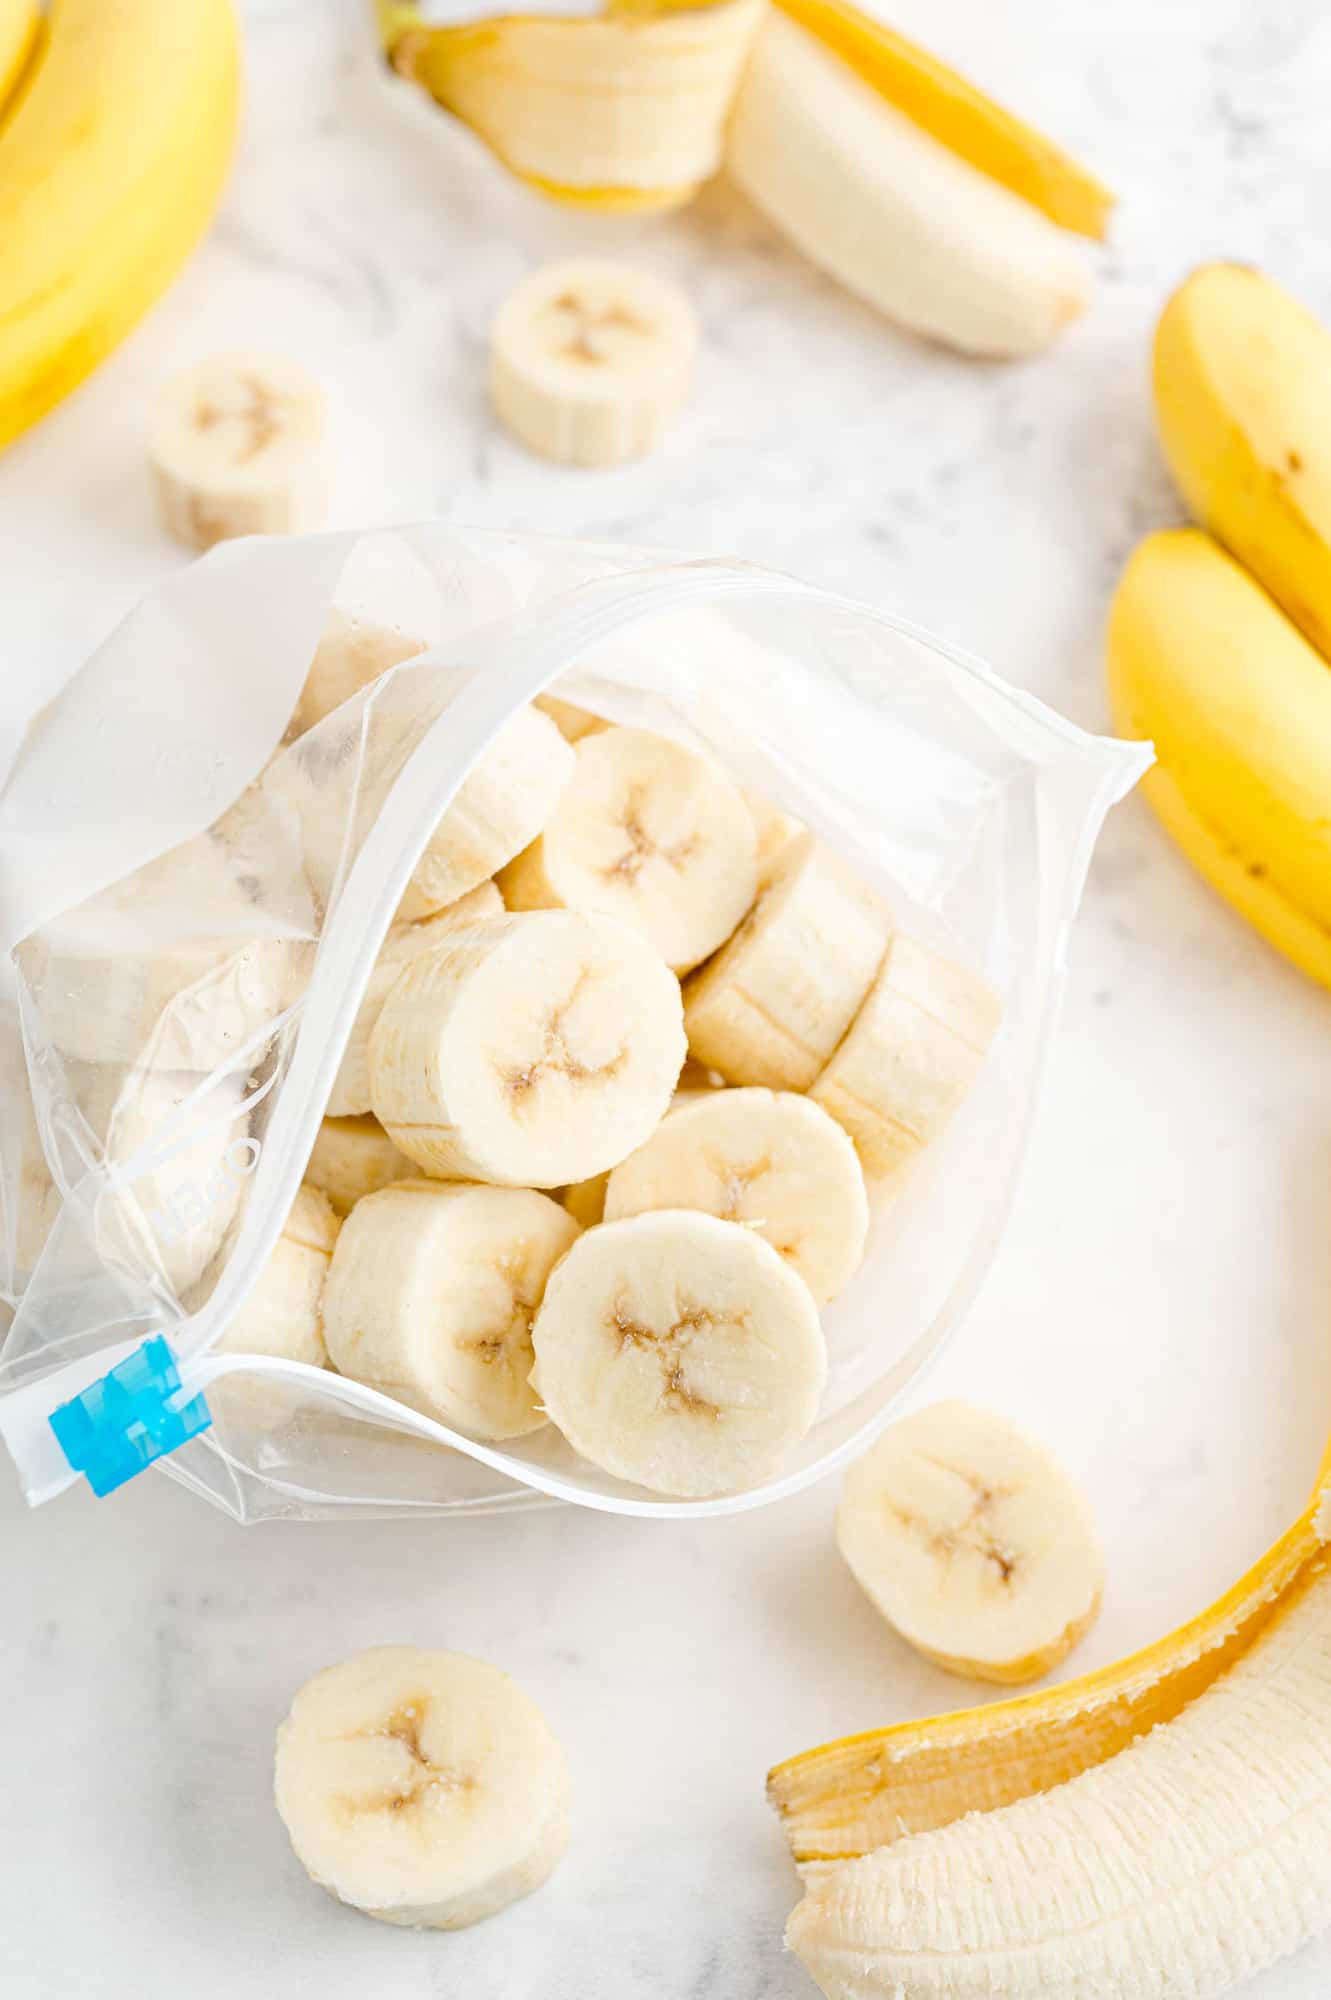 Frozen bananas in a freezer bag.